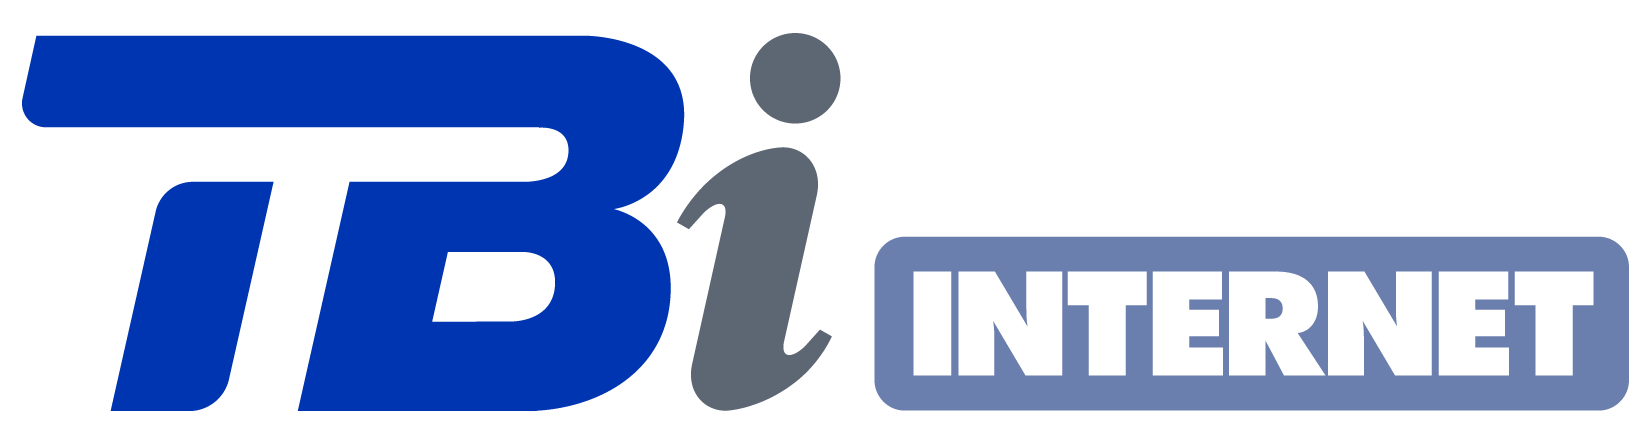 TBi-Internet logo